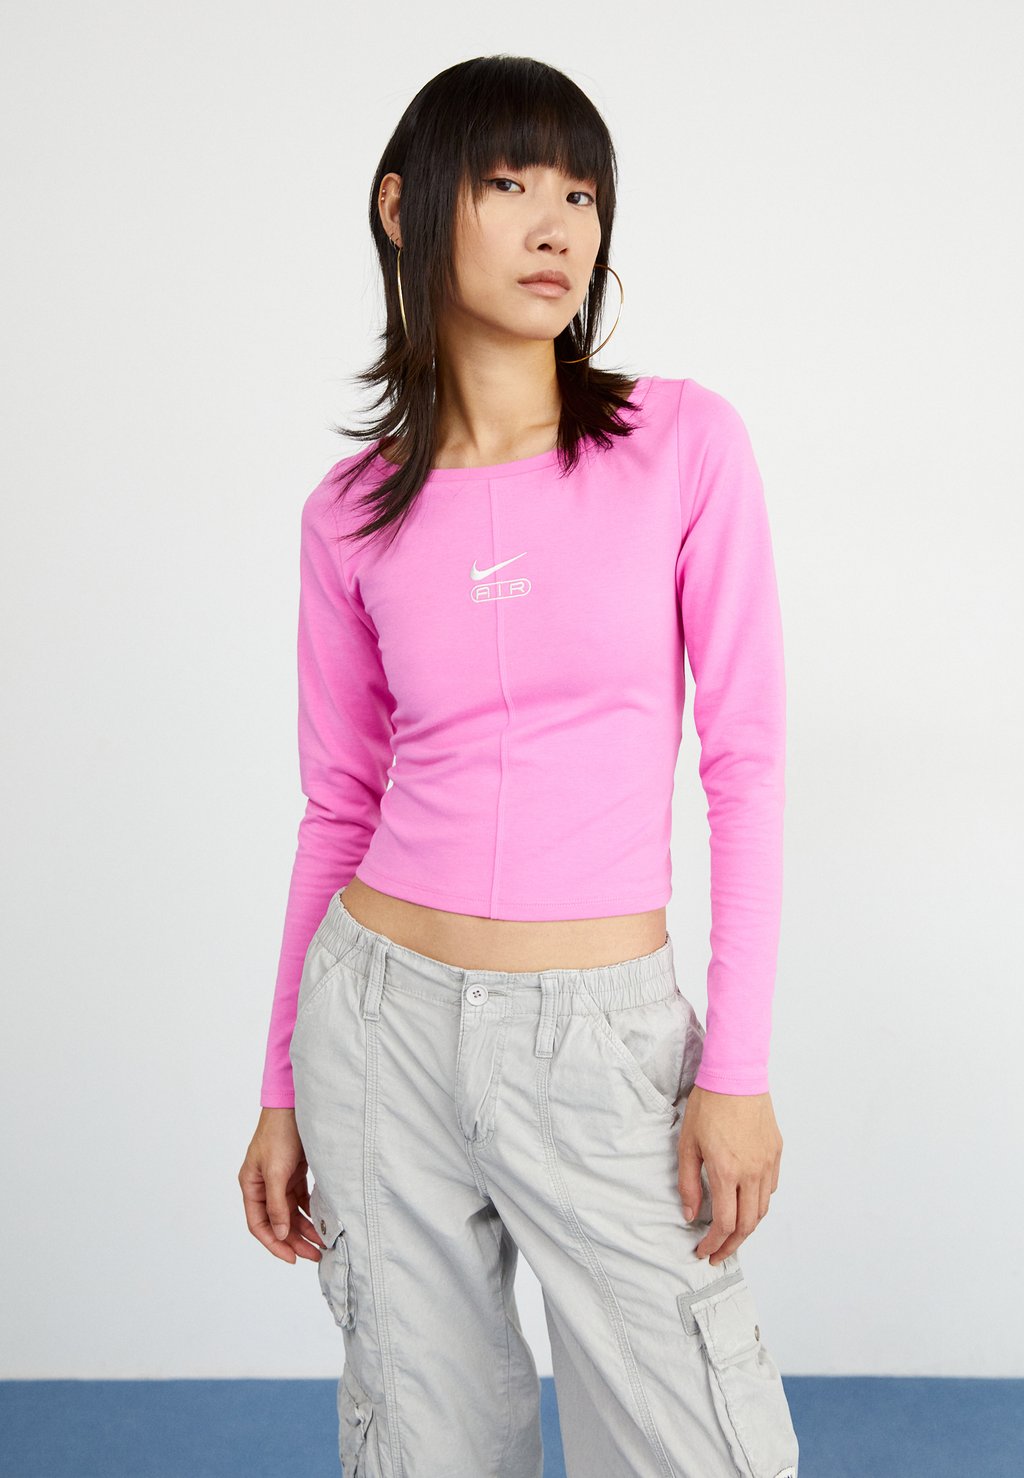 Футболка с длинным рукавом Air Nike, цвет playful pink